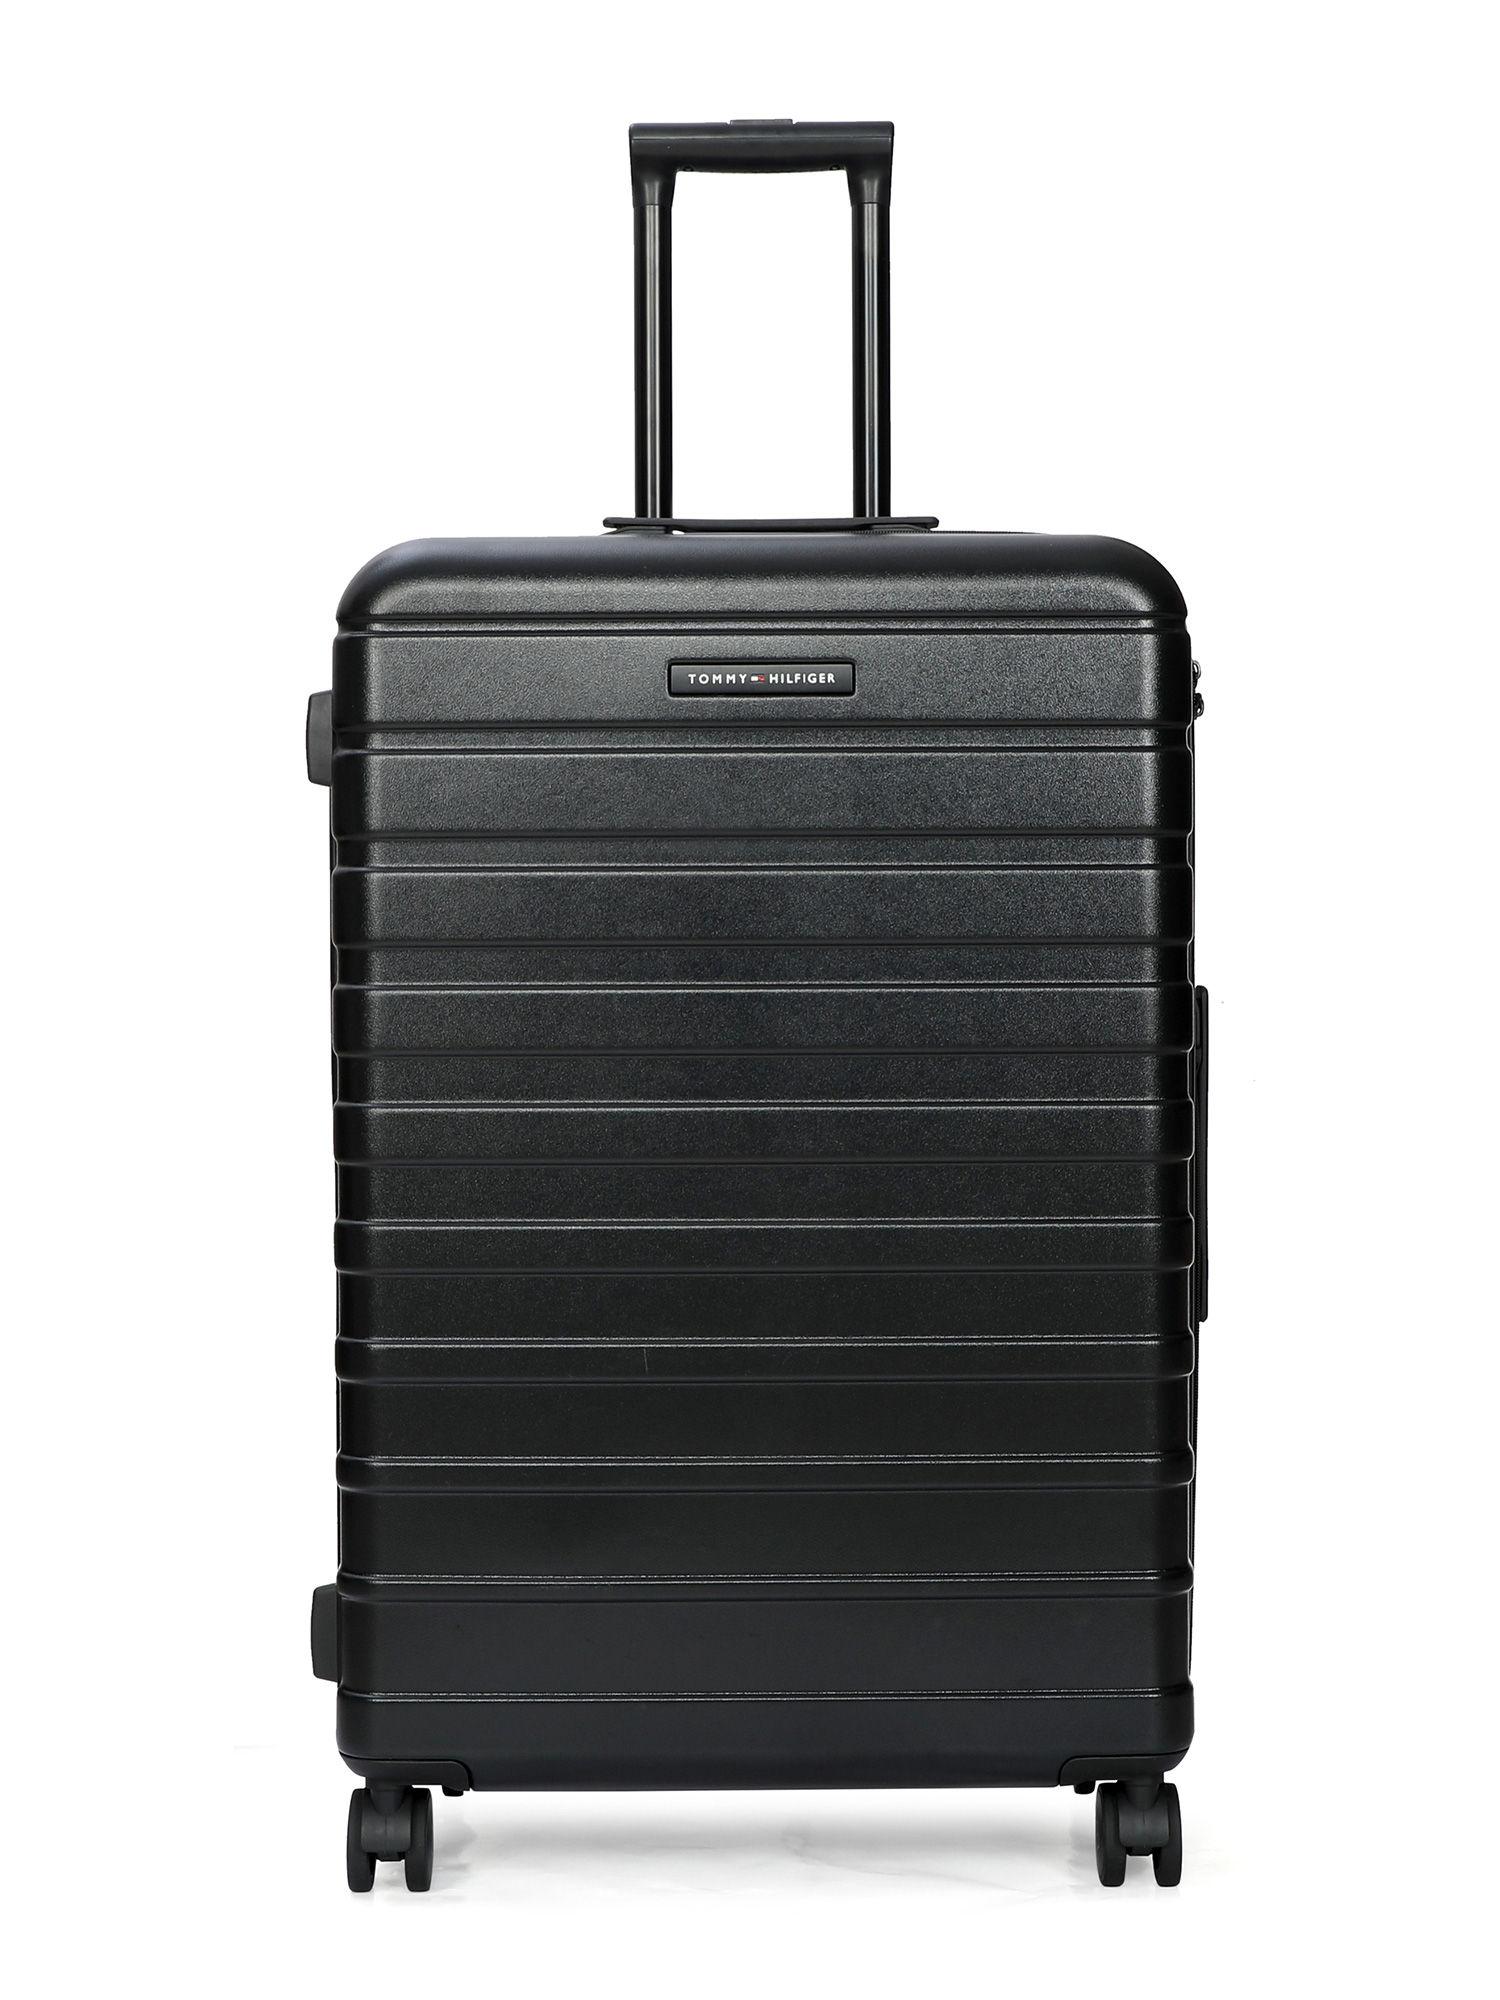 hoover hard luggage trolley bag textured cargo black